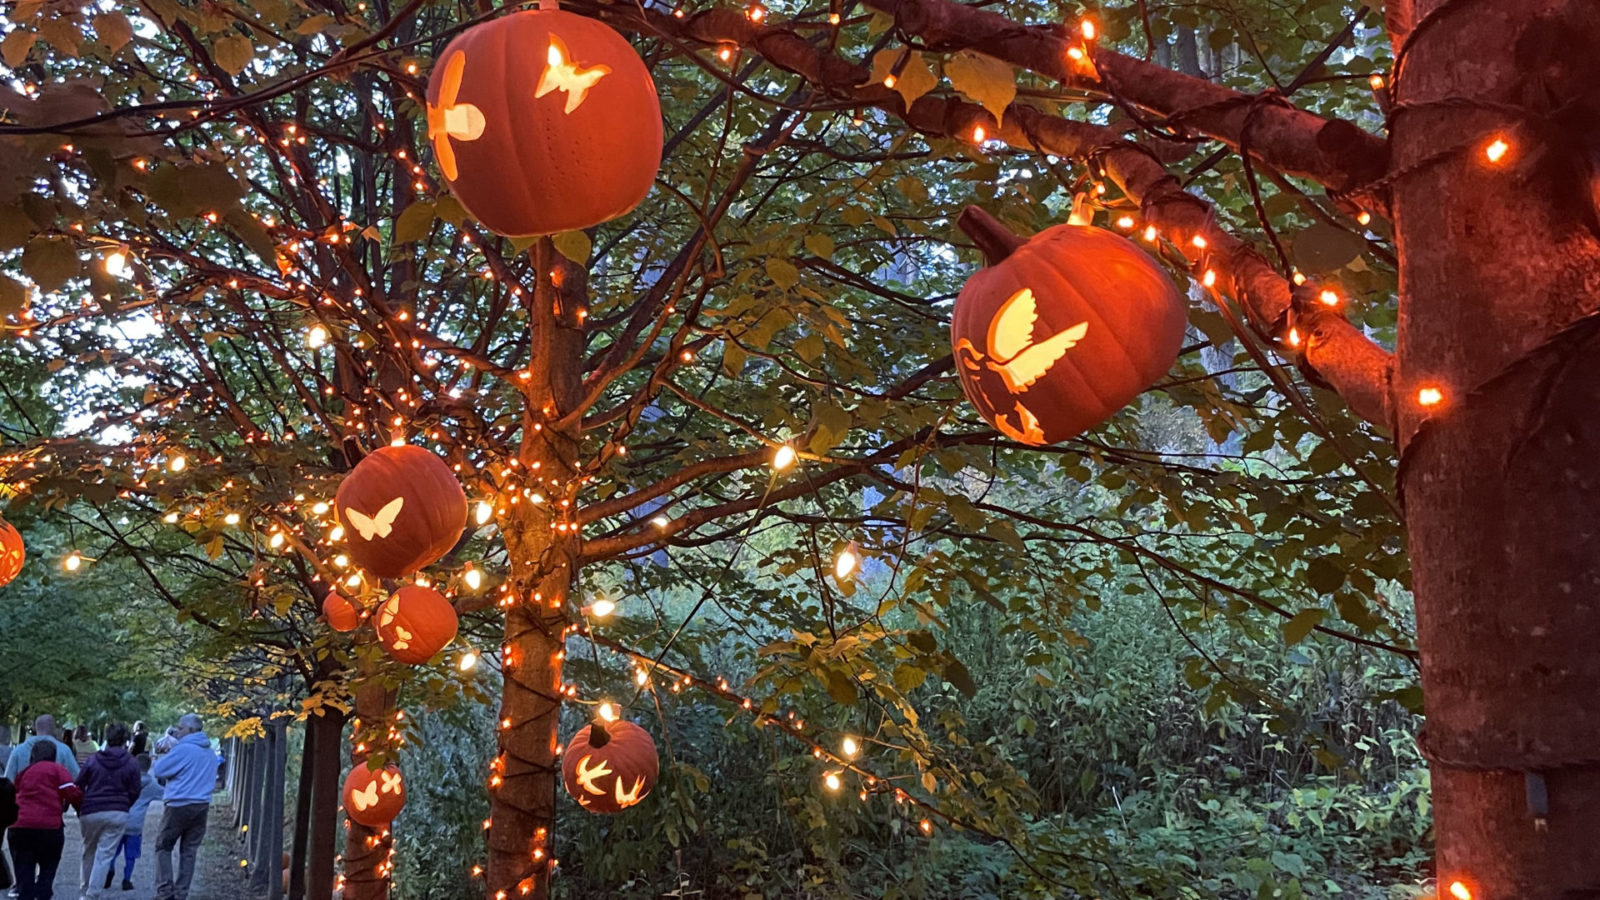 Pumpkins hang in trees like lanterns at the Naumkeag Pumpkin Walk.